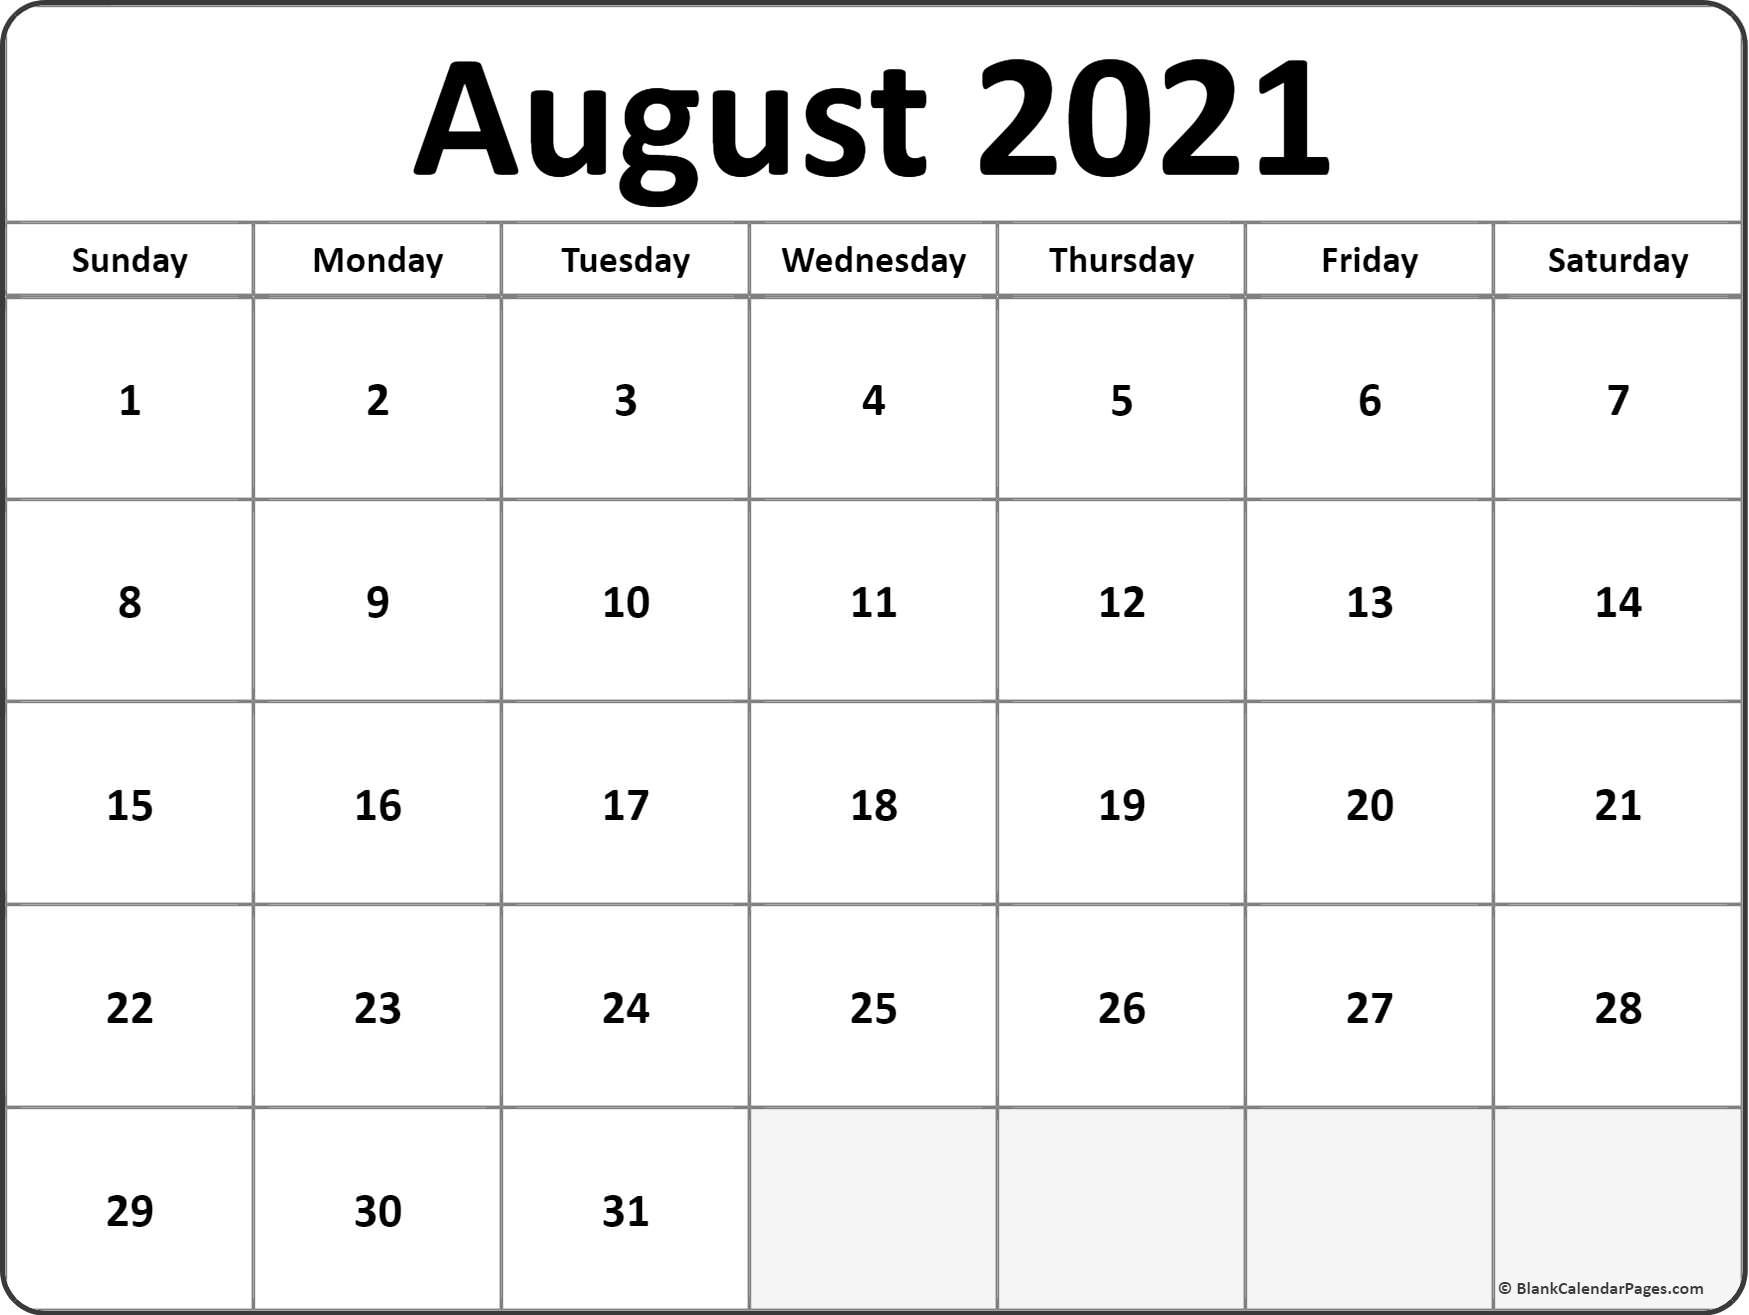 August 2021 Blank Calendar Templates.-Blank Calendars 2021 Printable